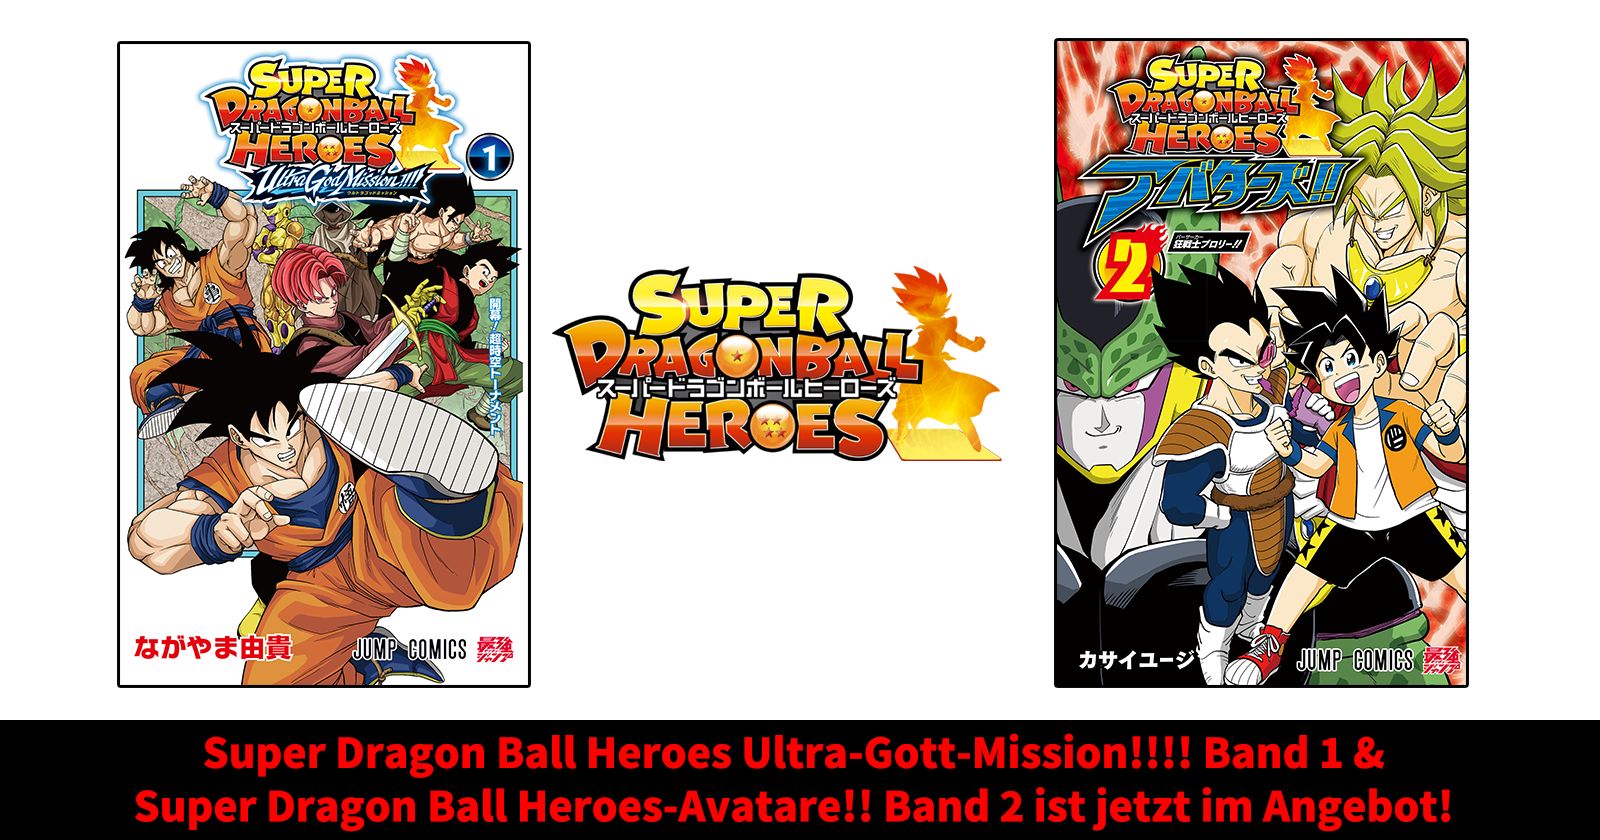 Super Dragon Ball Heroes Ultra-Gott-Mission!!!! Band 1 & Super Dragon Ball Heroes-Avatare!! Band 2 ist jetzt im Angebot!